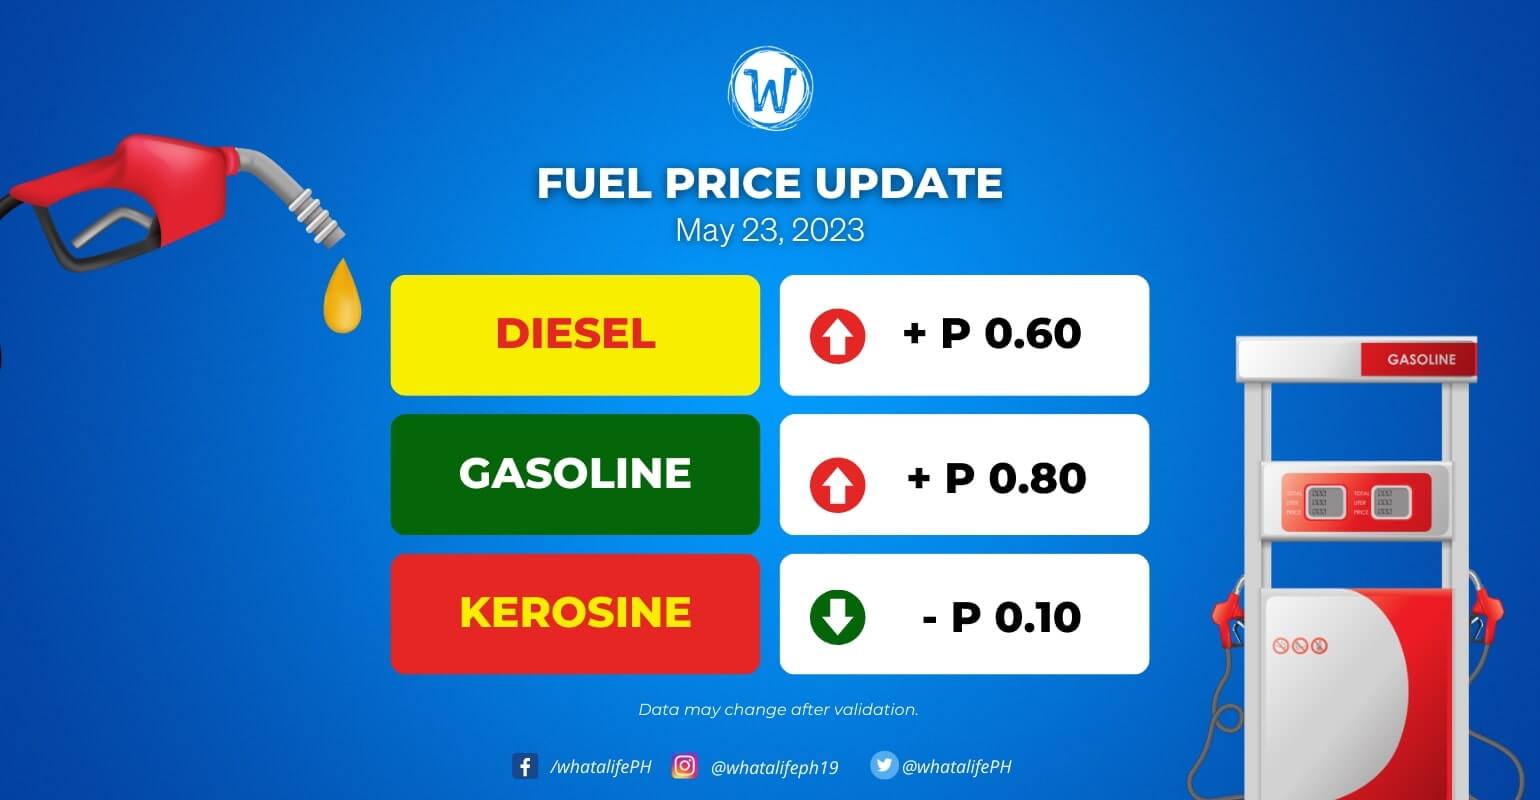 Fuel price adjustment effective May 23, 2023